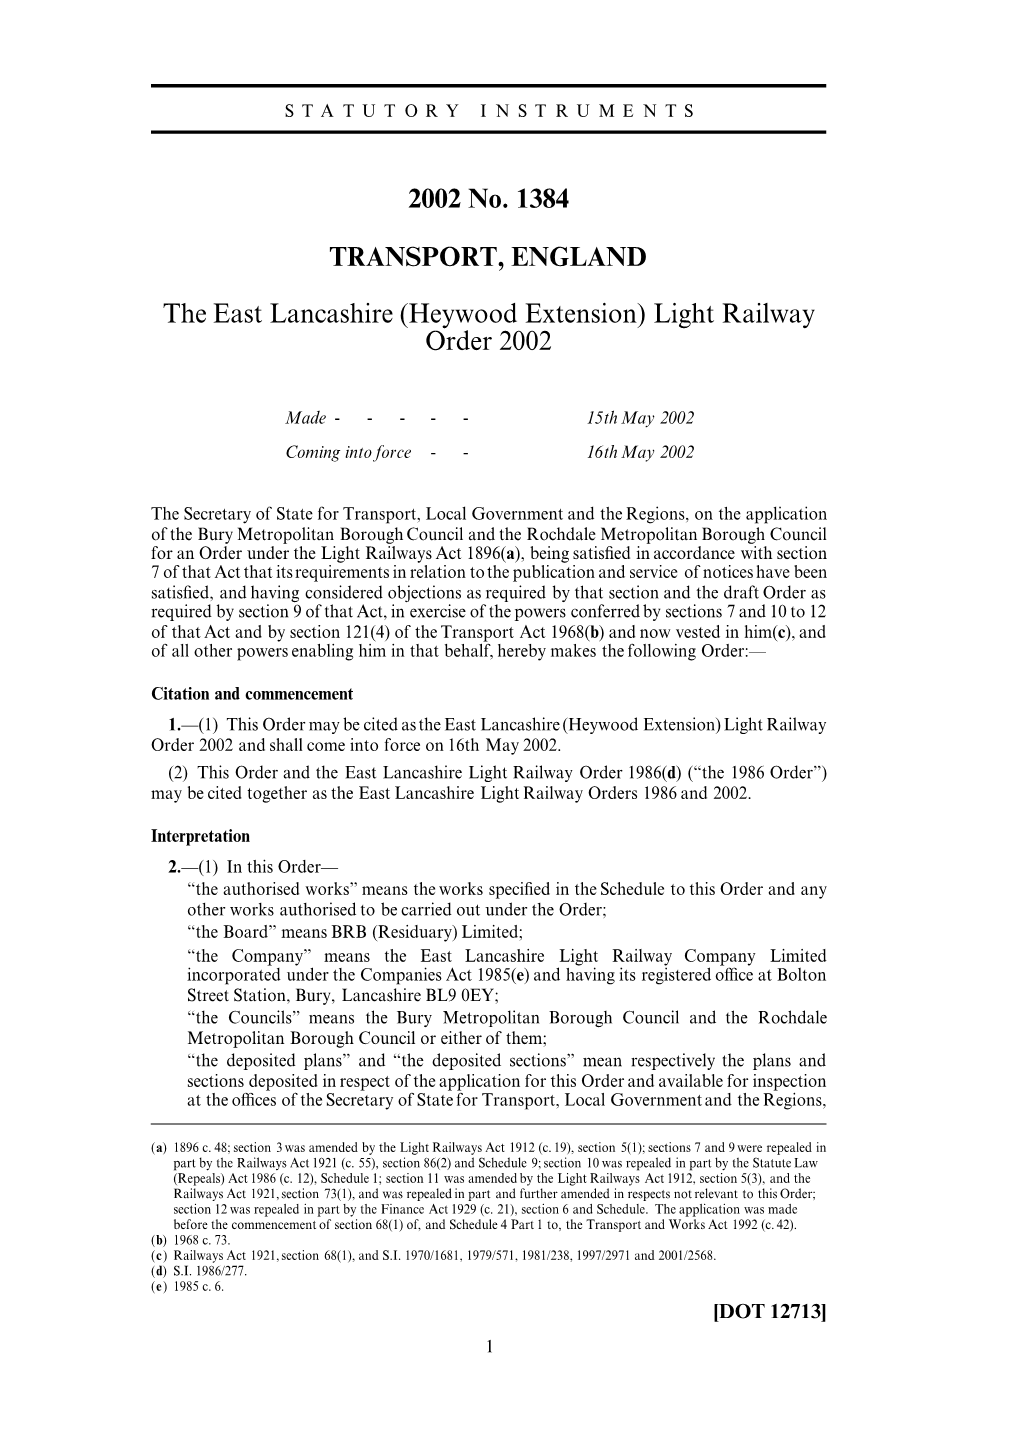 2002 No. 1384 TRANSPORT, ENGLAND the East Lancashire